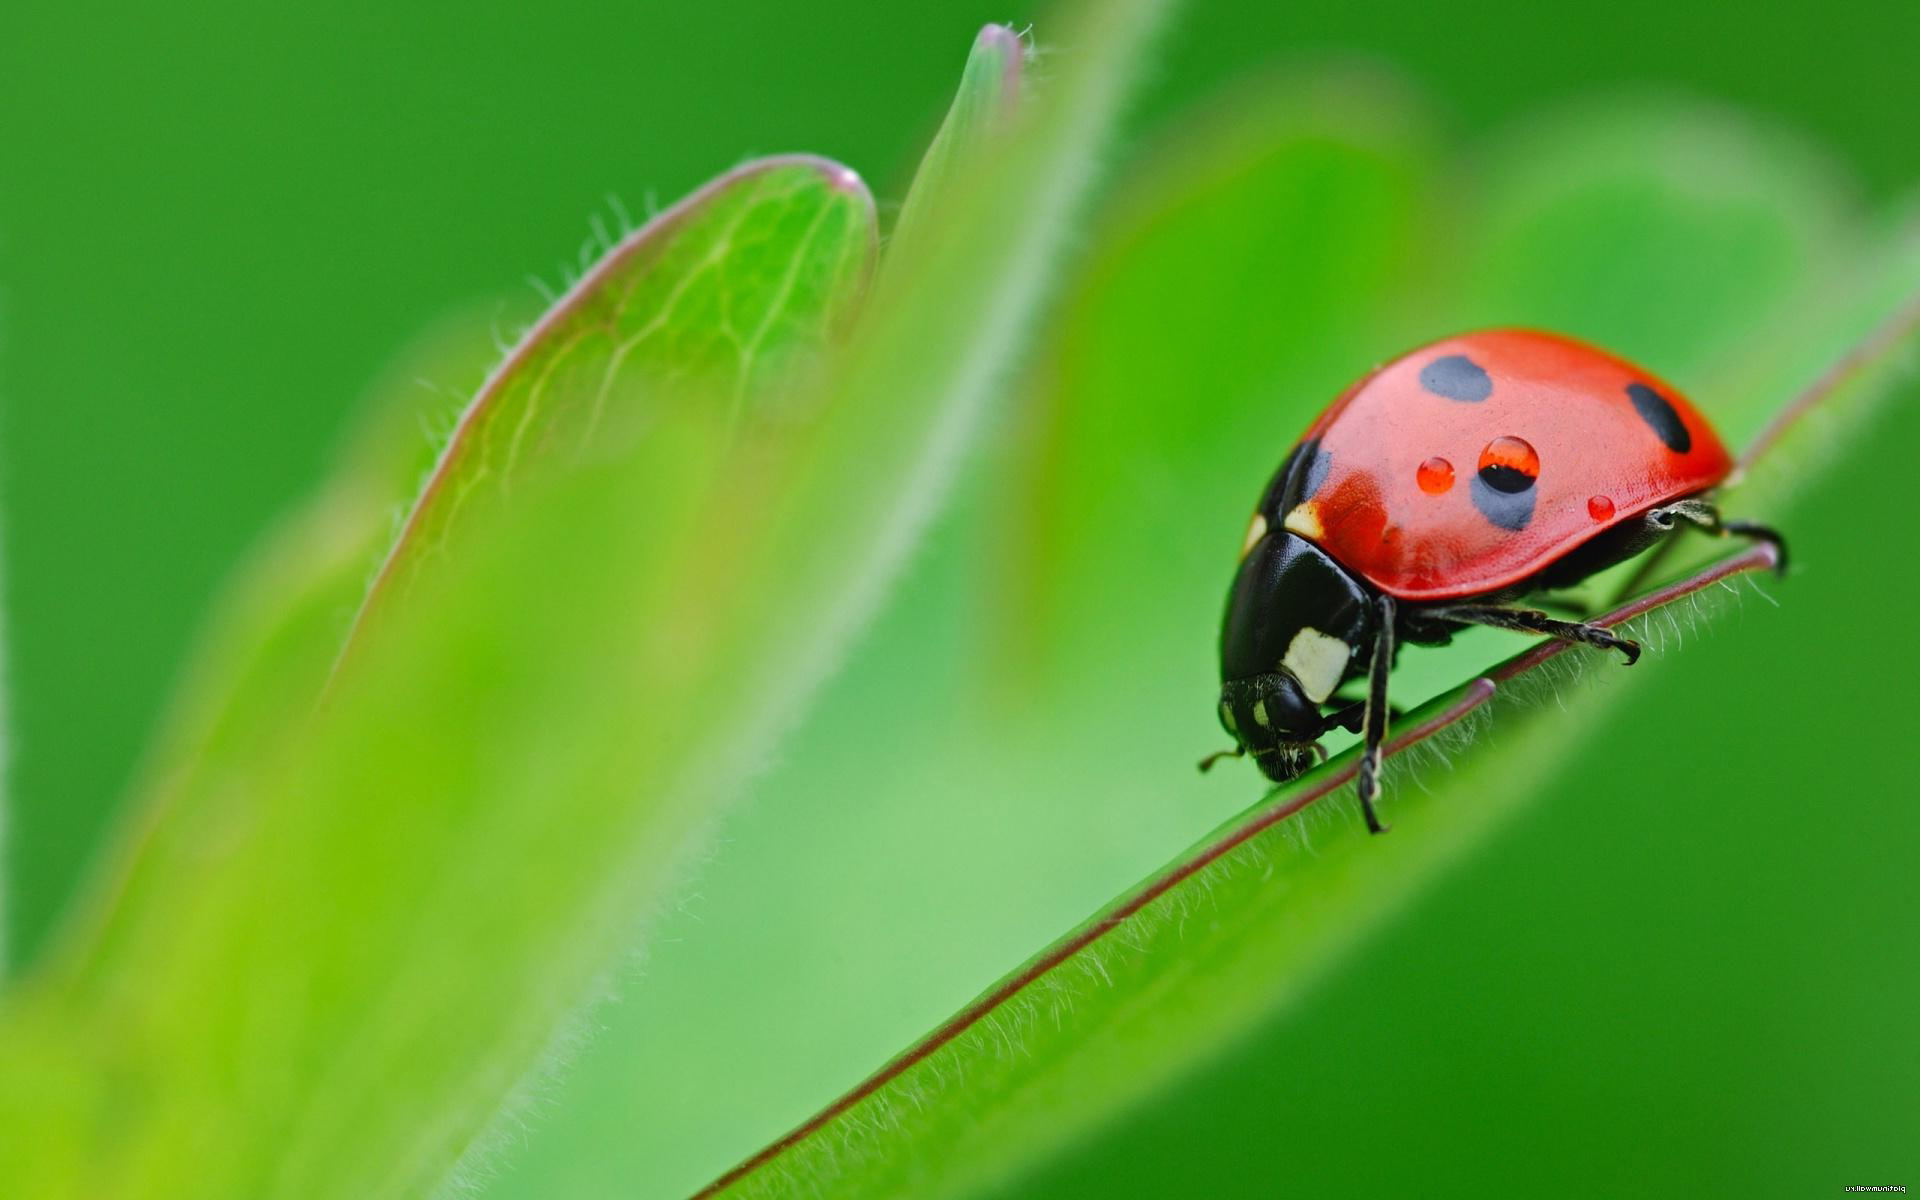 Ladybug Wallpaper HD